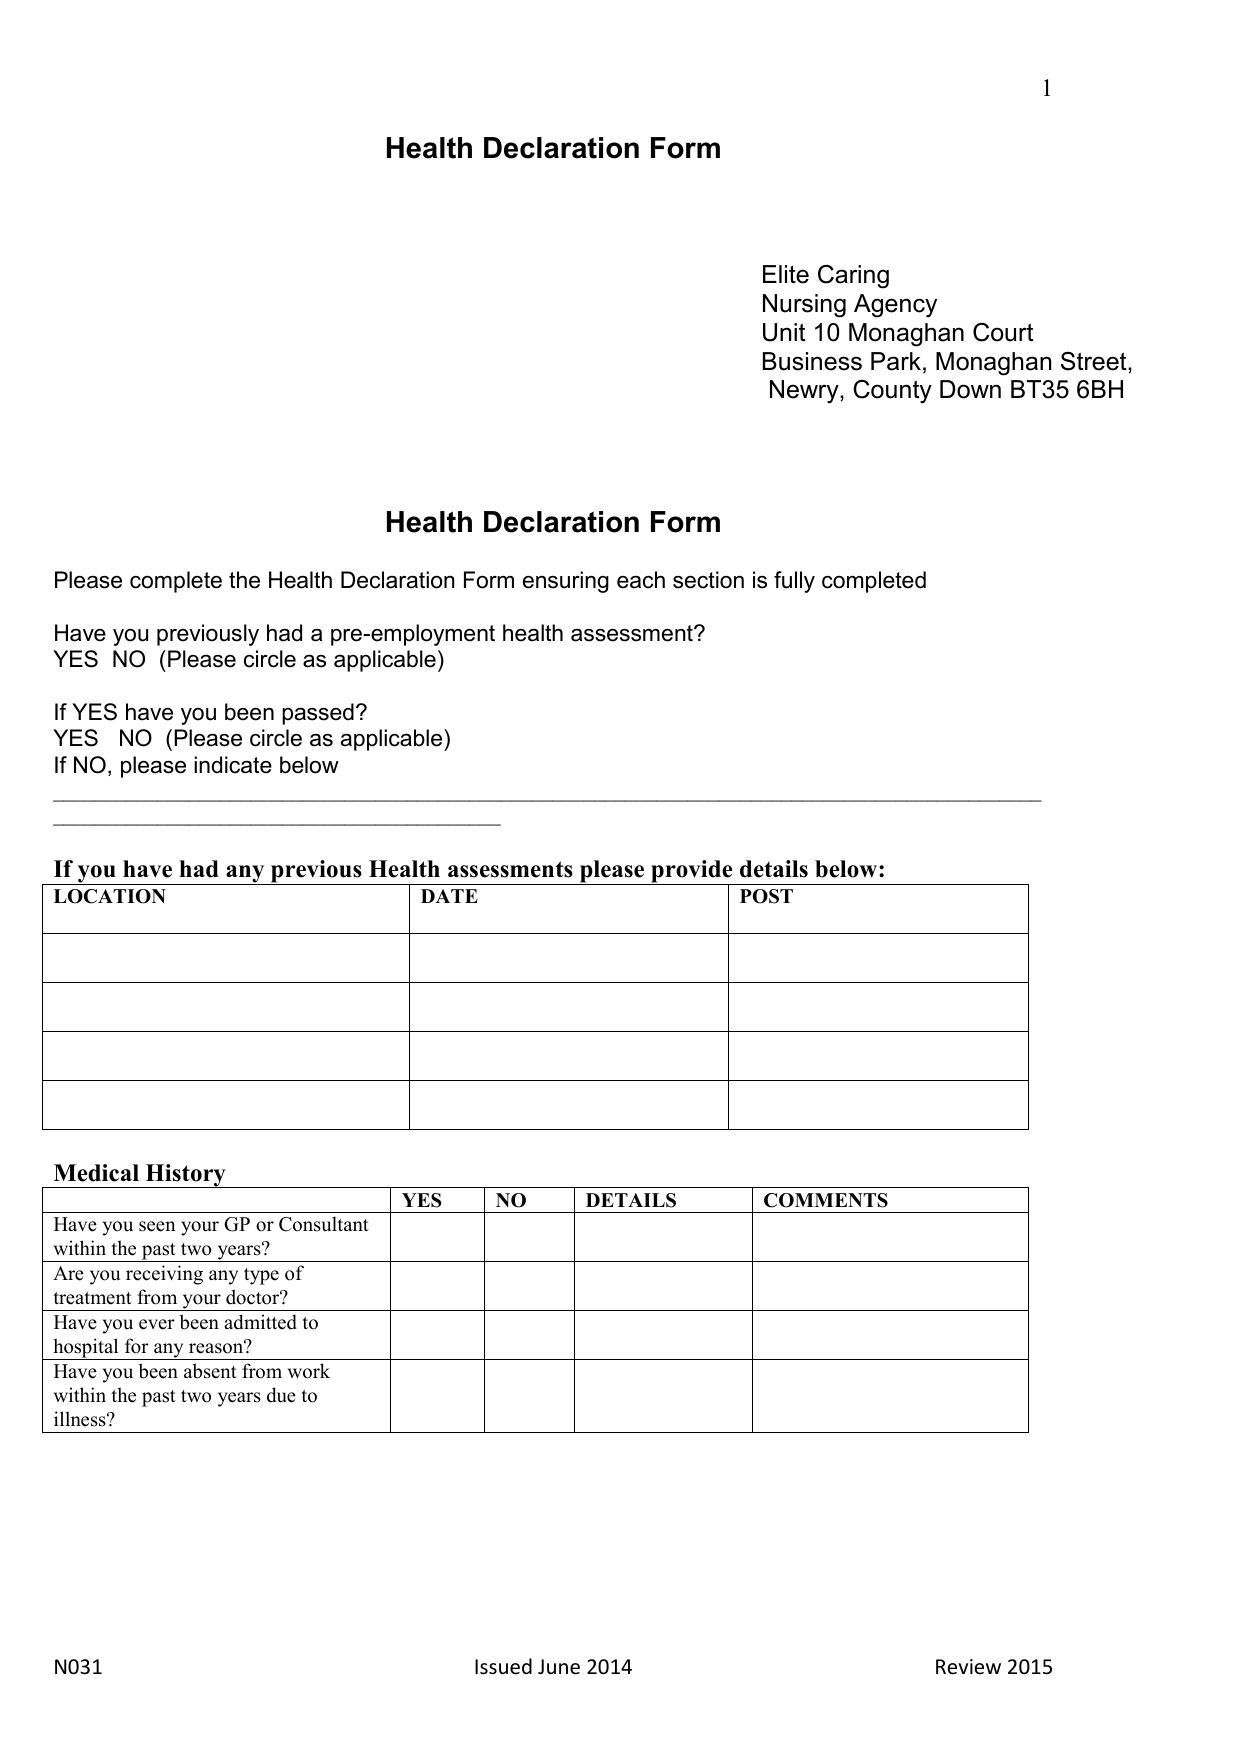 health-declaration-form